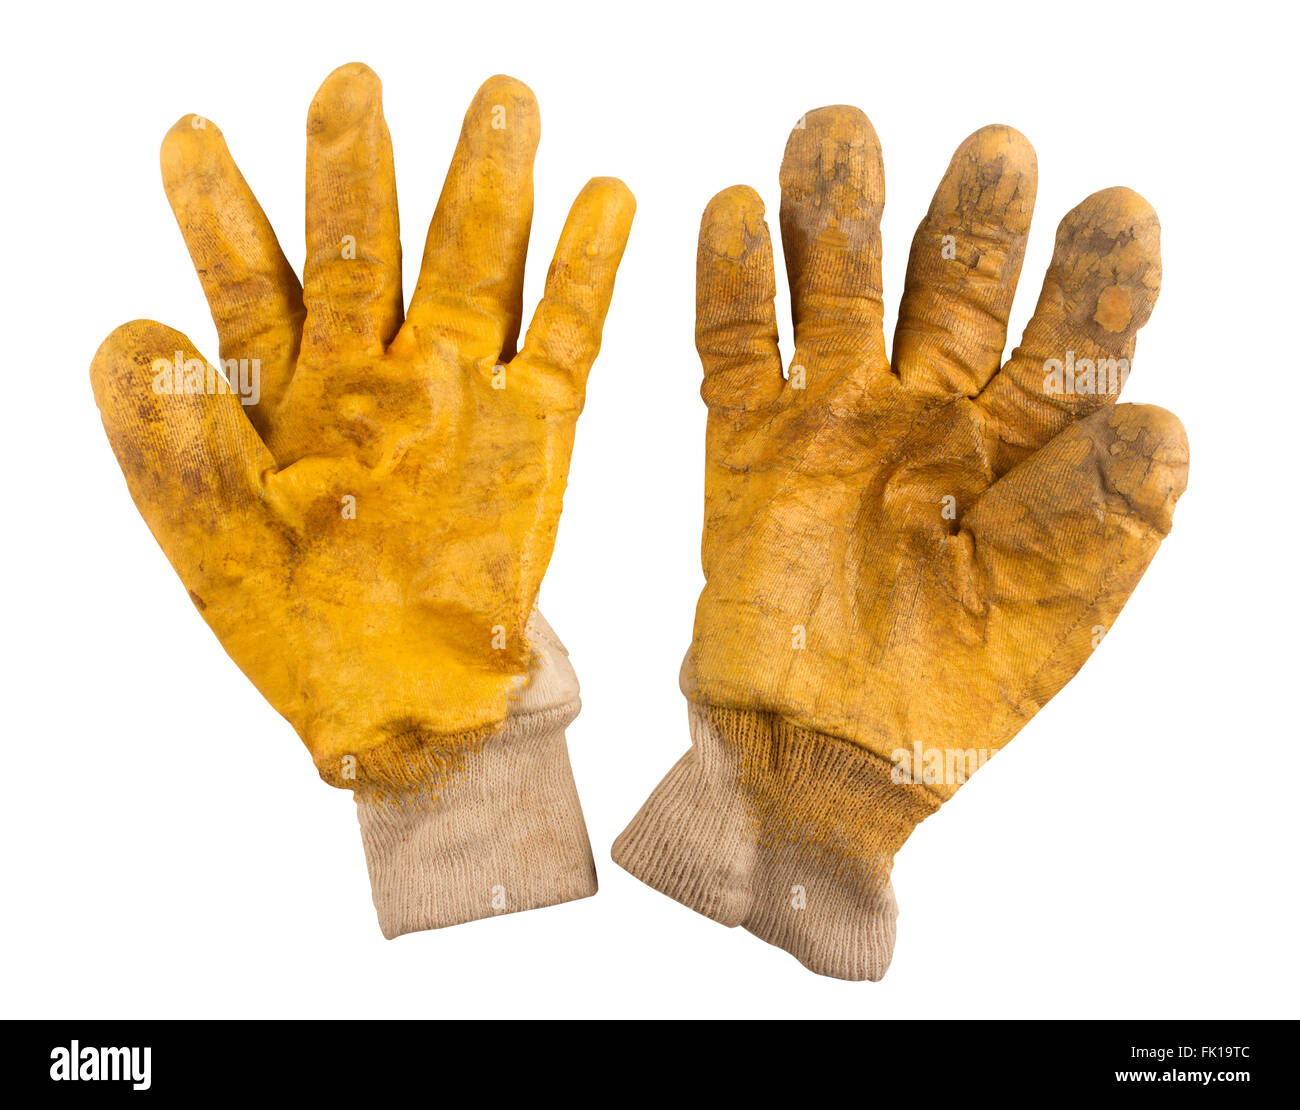 https://c8.alamy.com/comp/FK19TC/used-pair-of-gardening-yellow-gloves-isolated-on-white-background-FK19TC.jpg